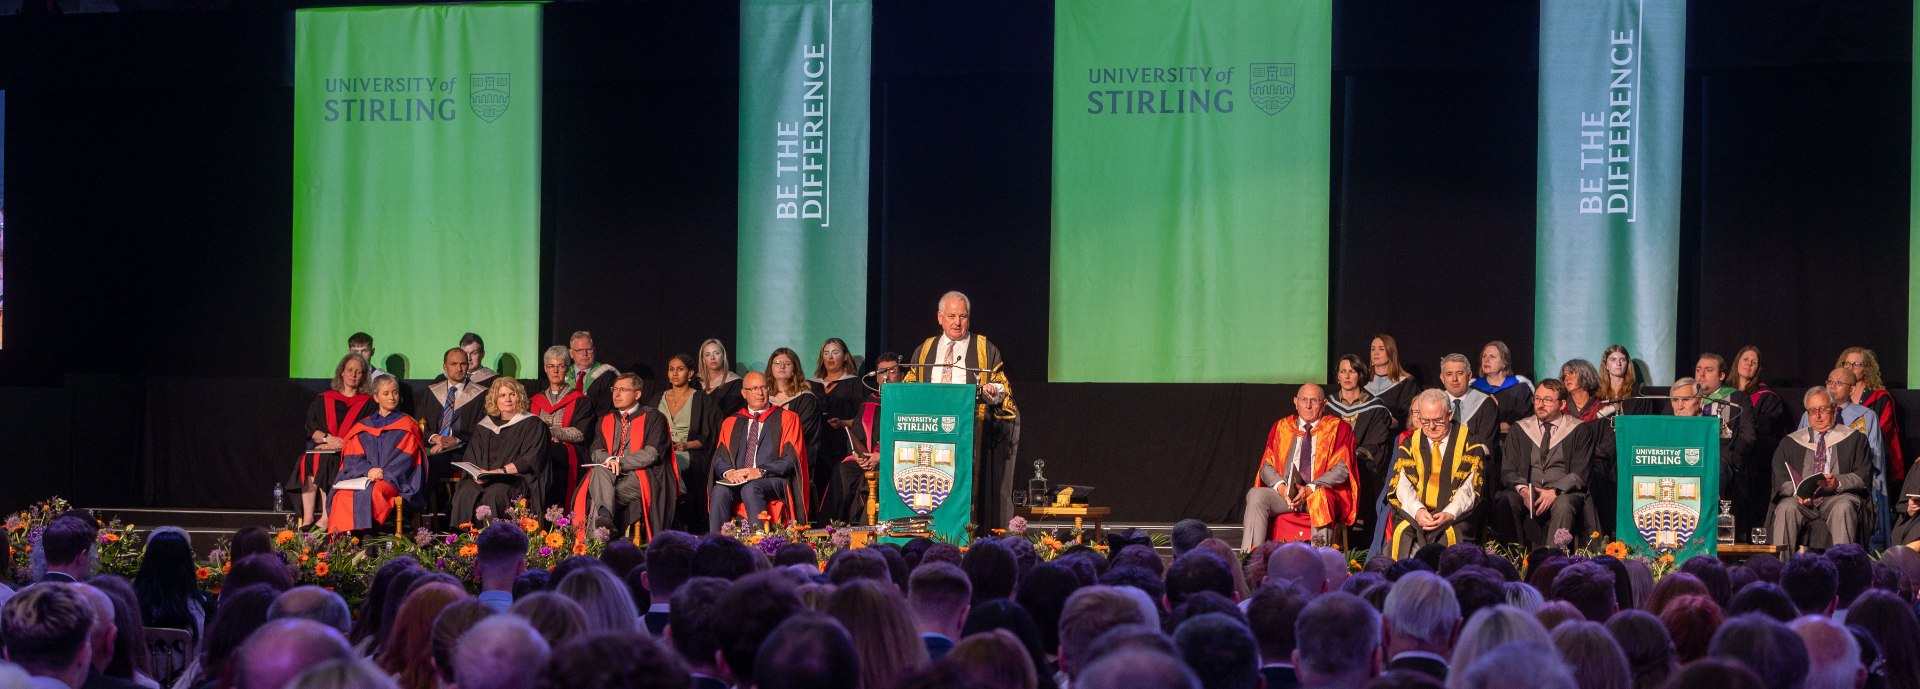 University of Stirling graduation ceremony.